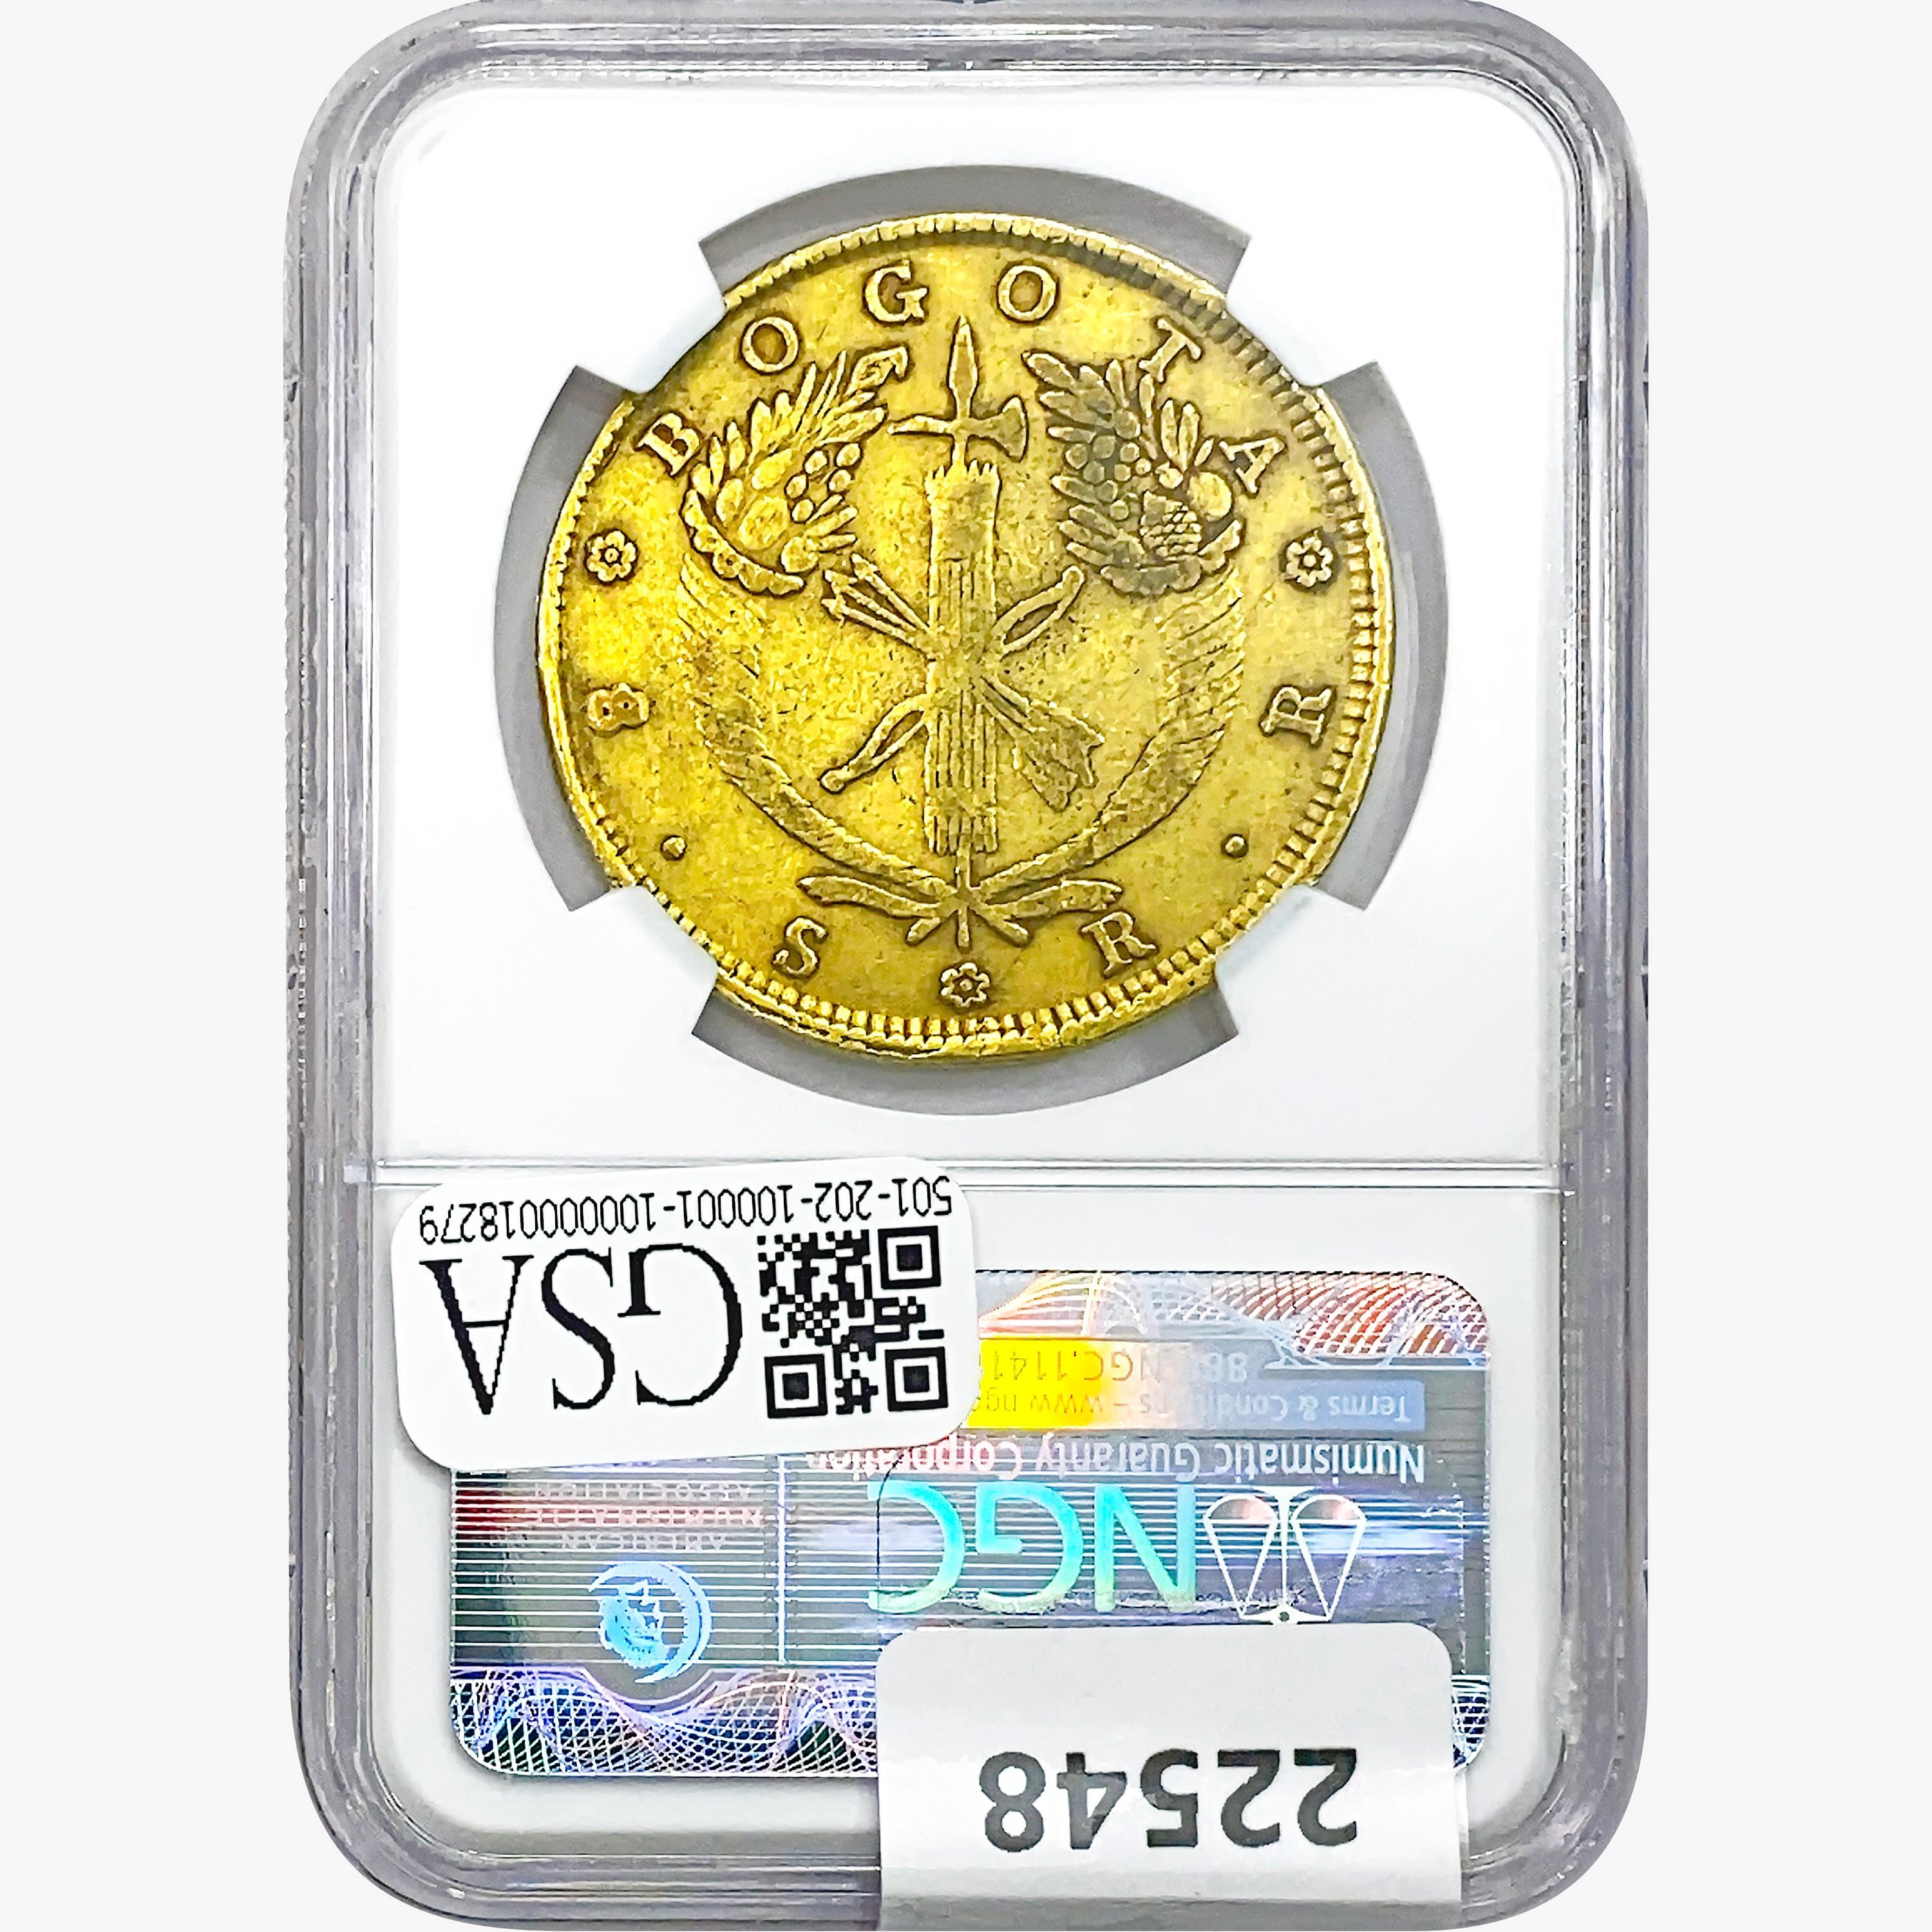 1827 .7617oz. Gold RR Colombia 8 E Bogota NGC VF30